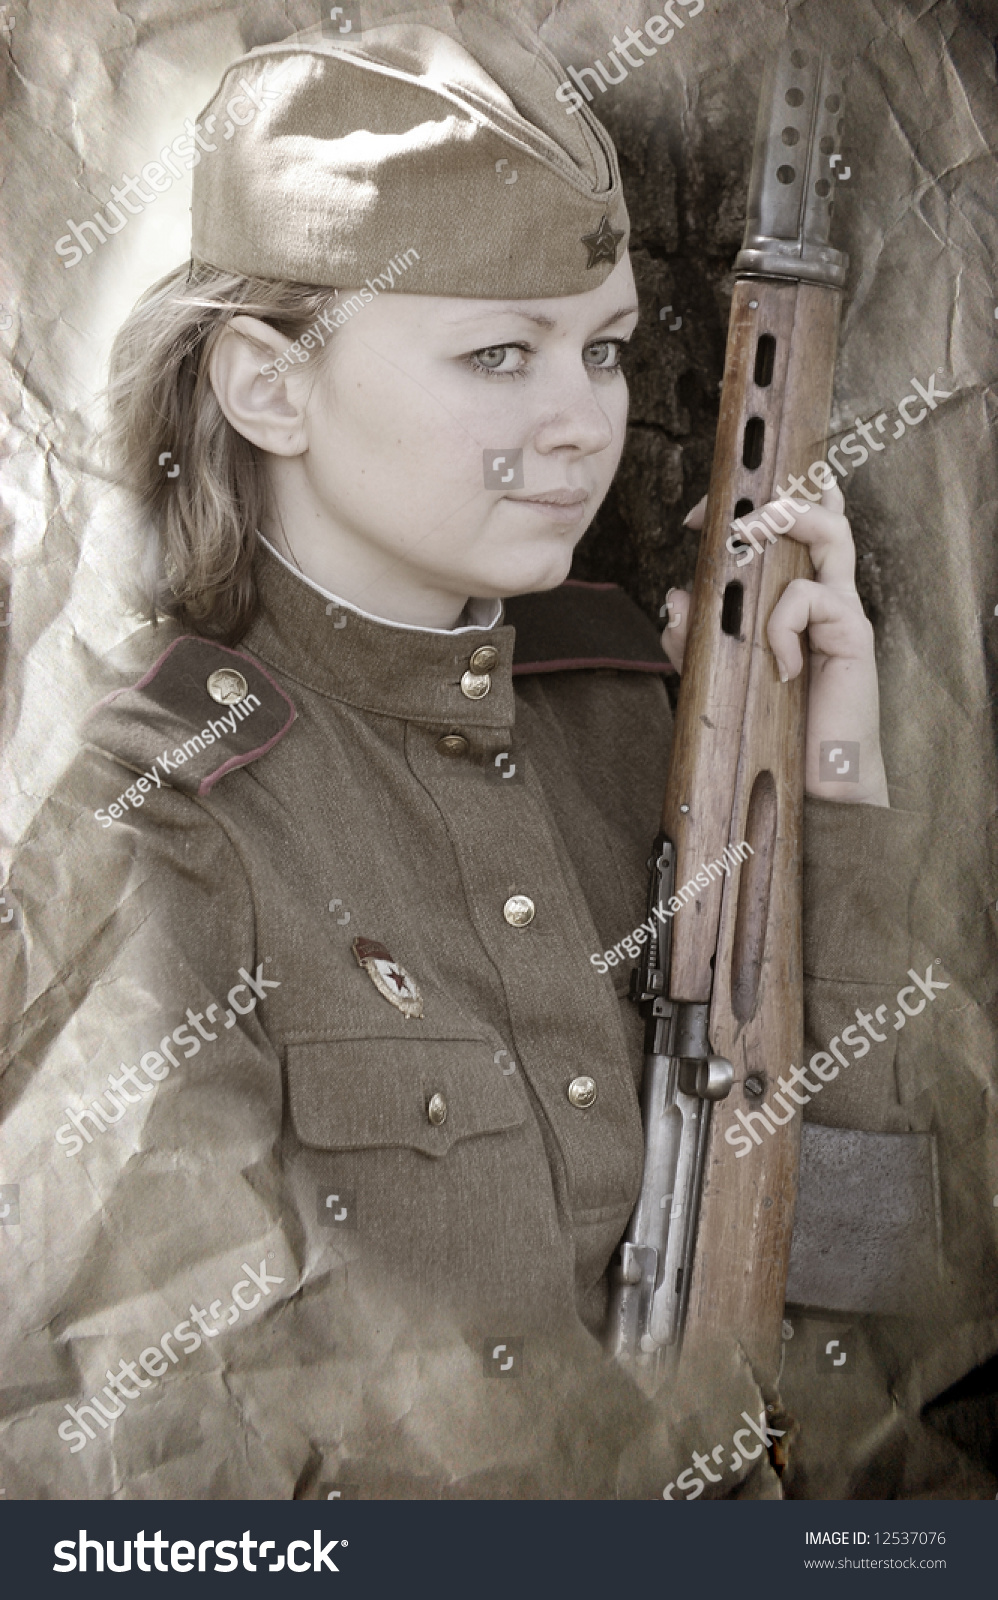 Russian Girl Soldier Ww2 Reenacting Stock Photo 12537076 - Shutterstock